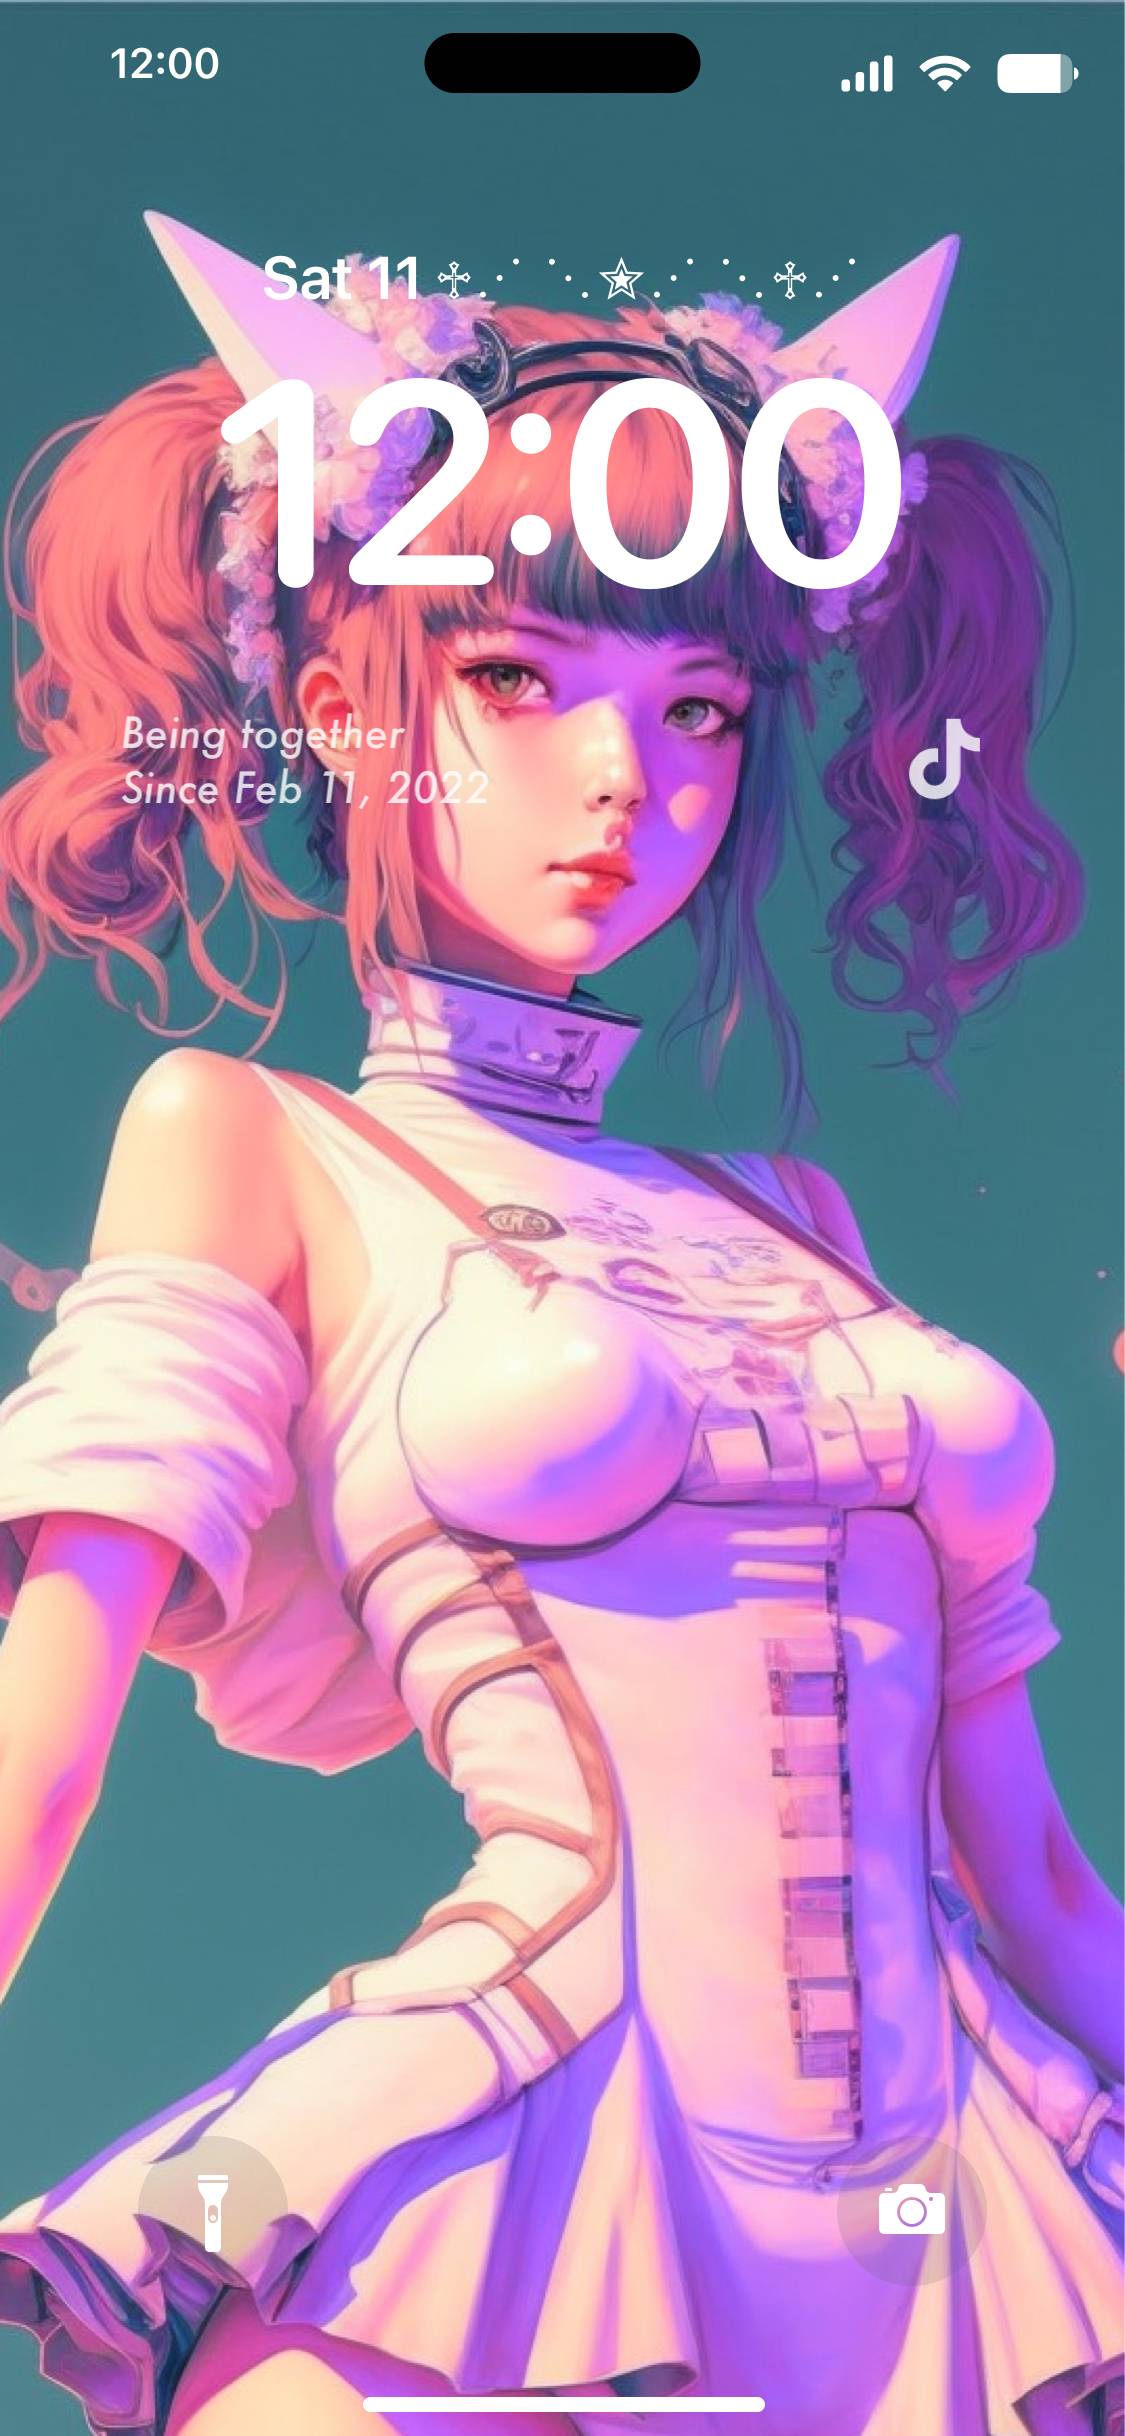 Cyberpunk girl lock screen Tela de bloqueio[6J3XZiCvg7JlsTzNcMWe]